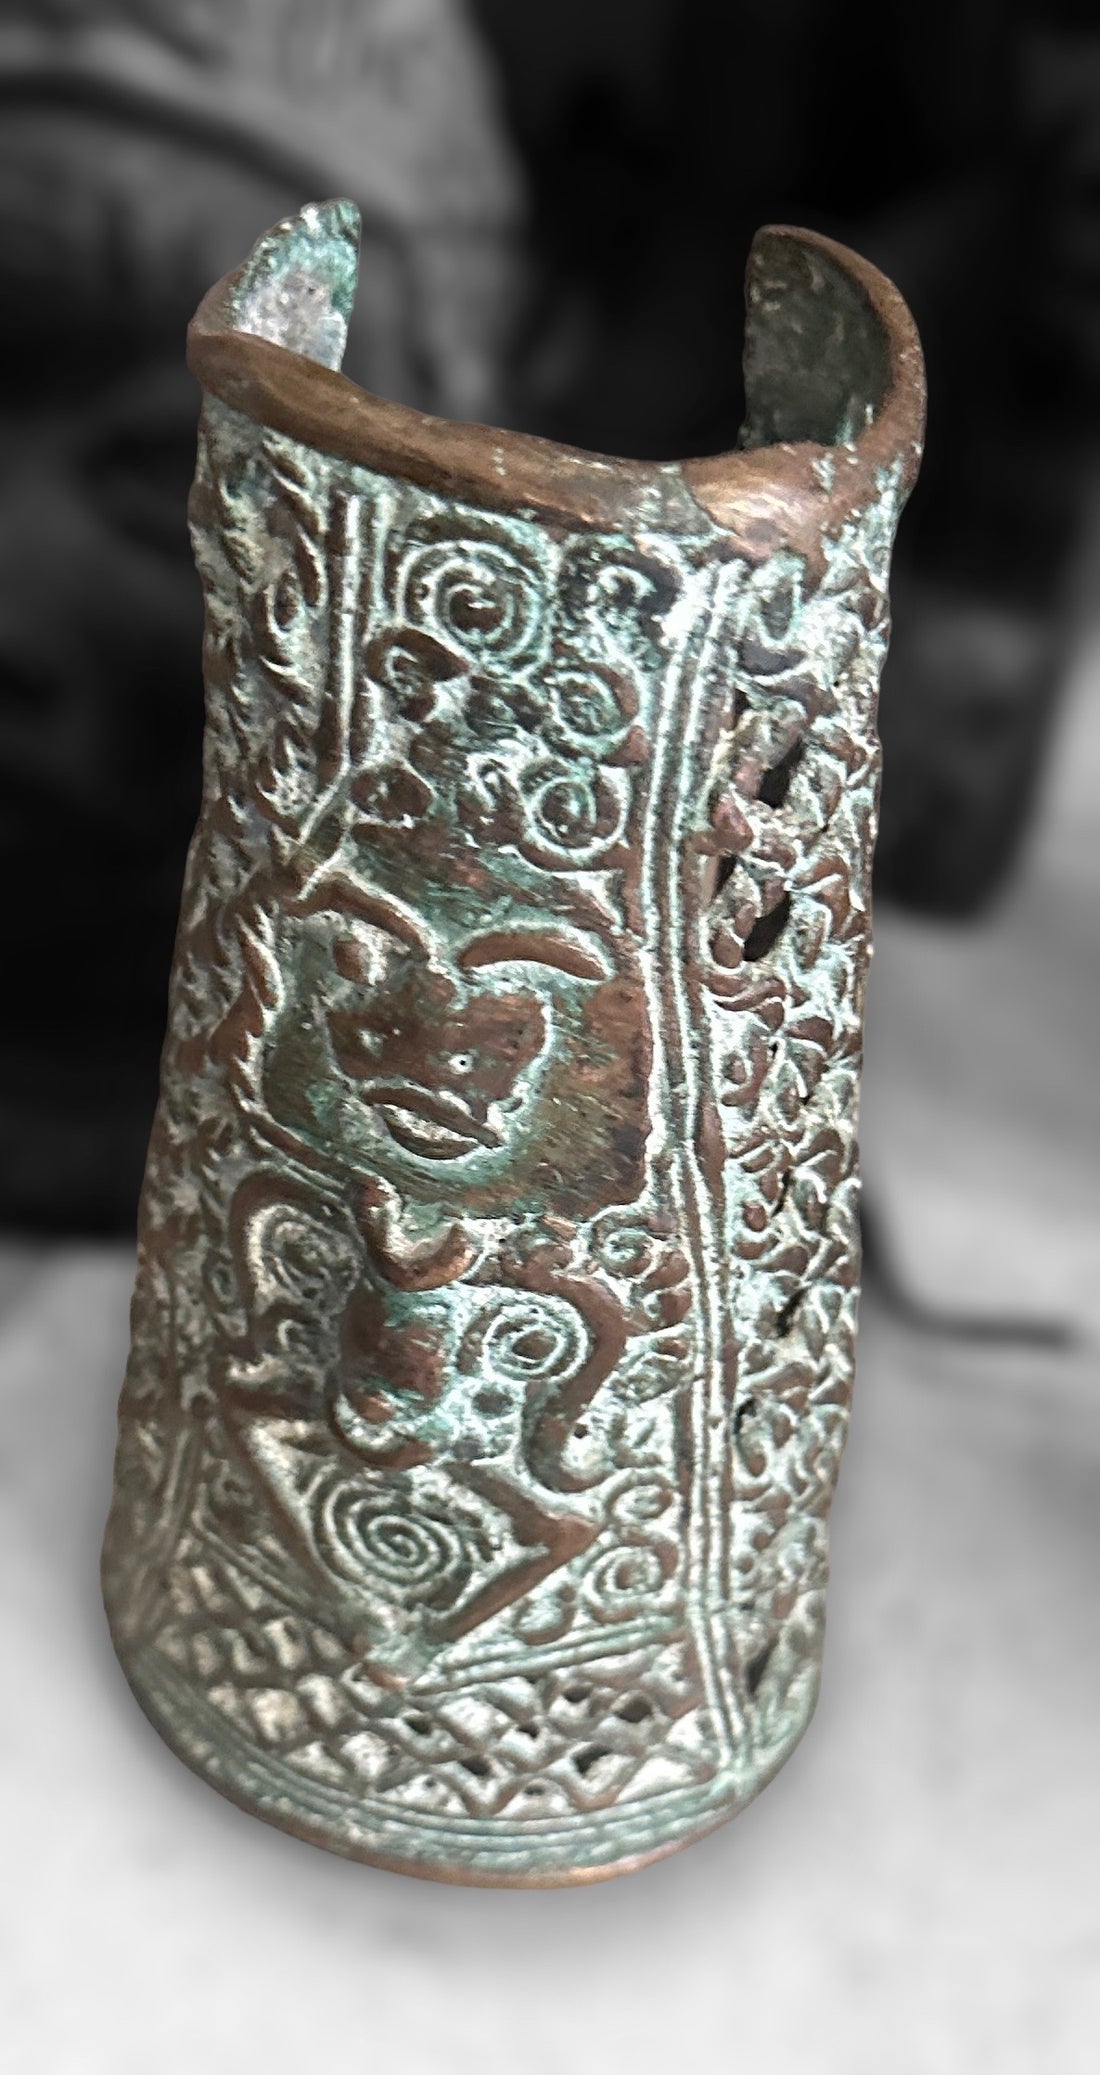 Cuff Bracelet - West African Benin Bronze